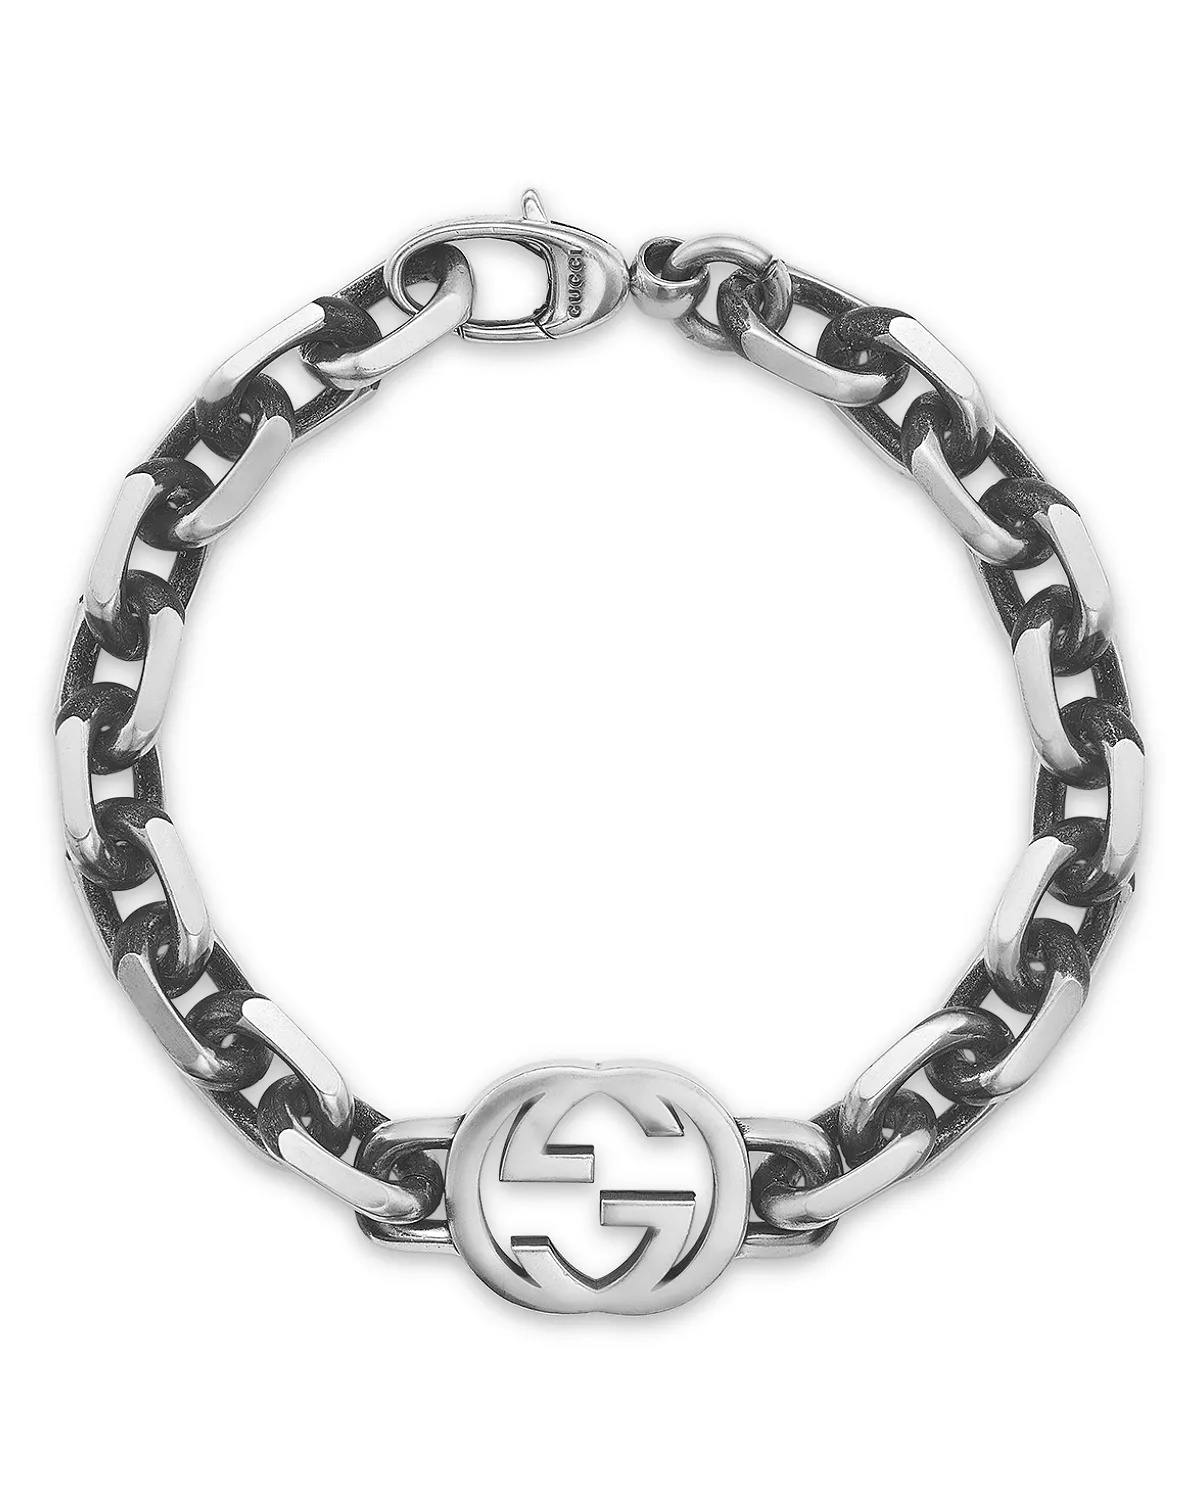 Sterling Silver Interlocking Chain Bracelet - 1